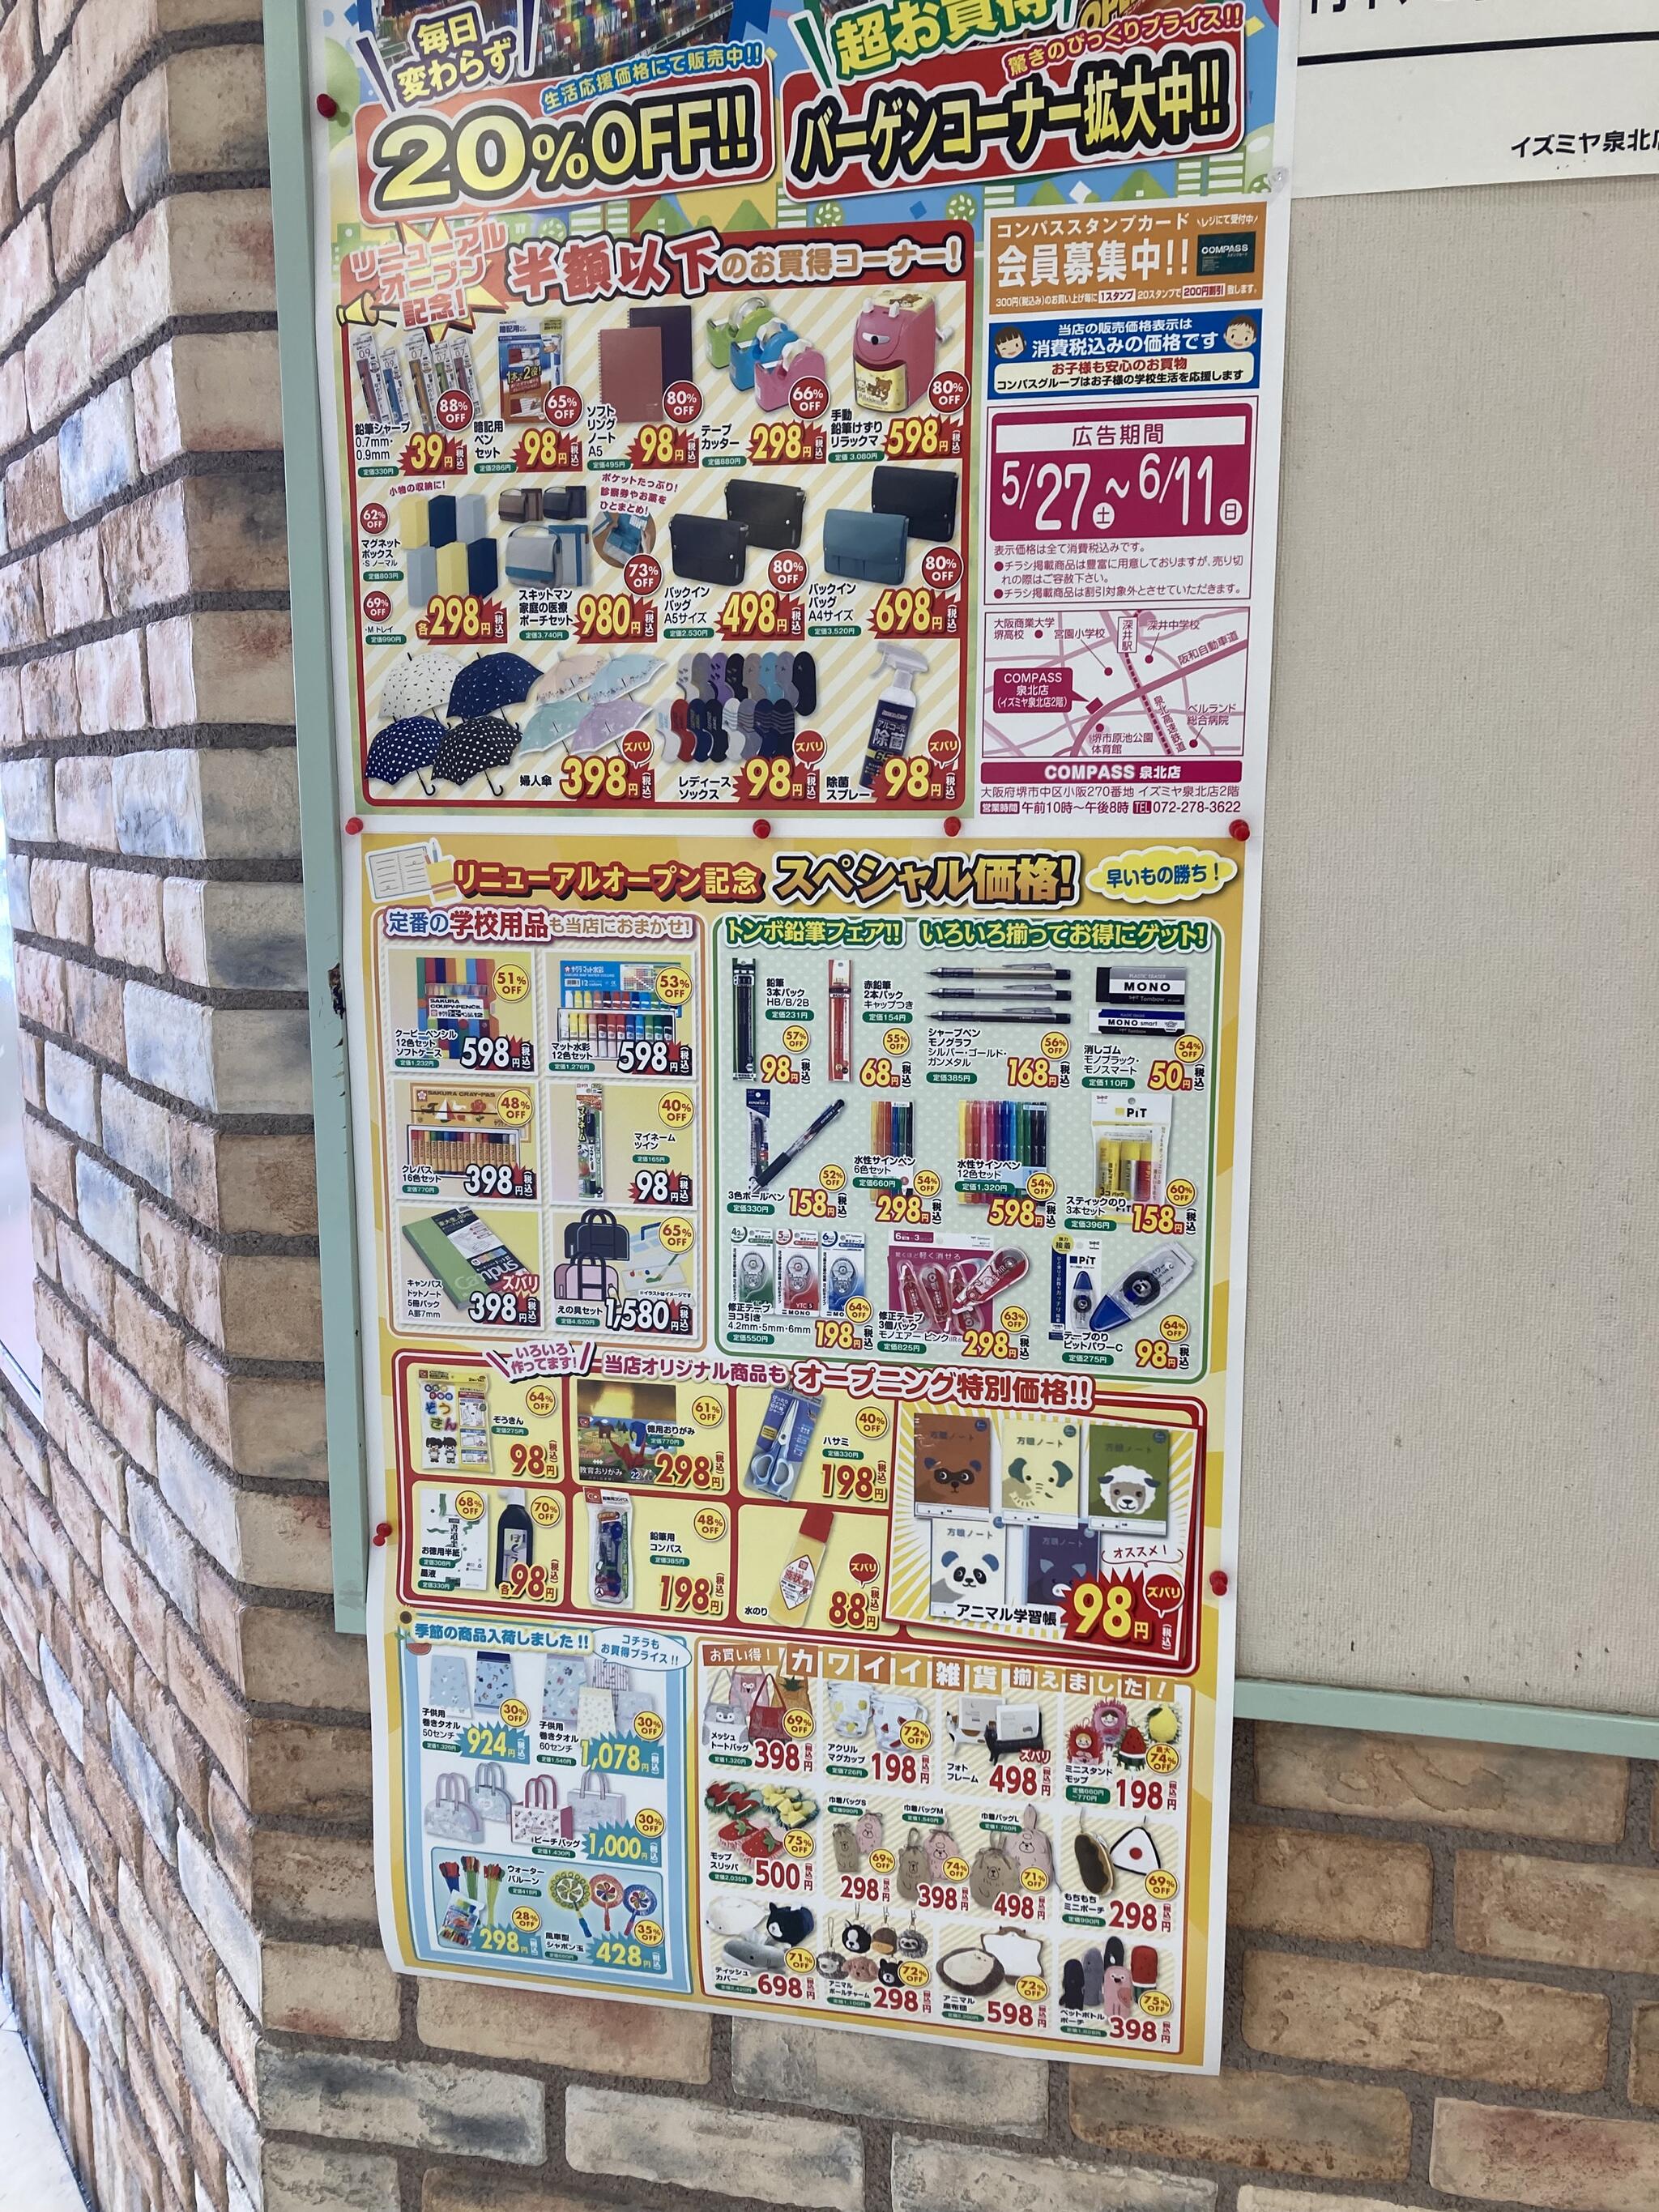 COMPASS 泉ヶ丘店の代表写真3